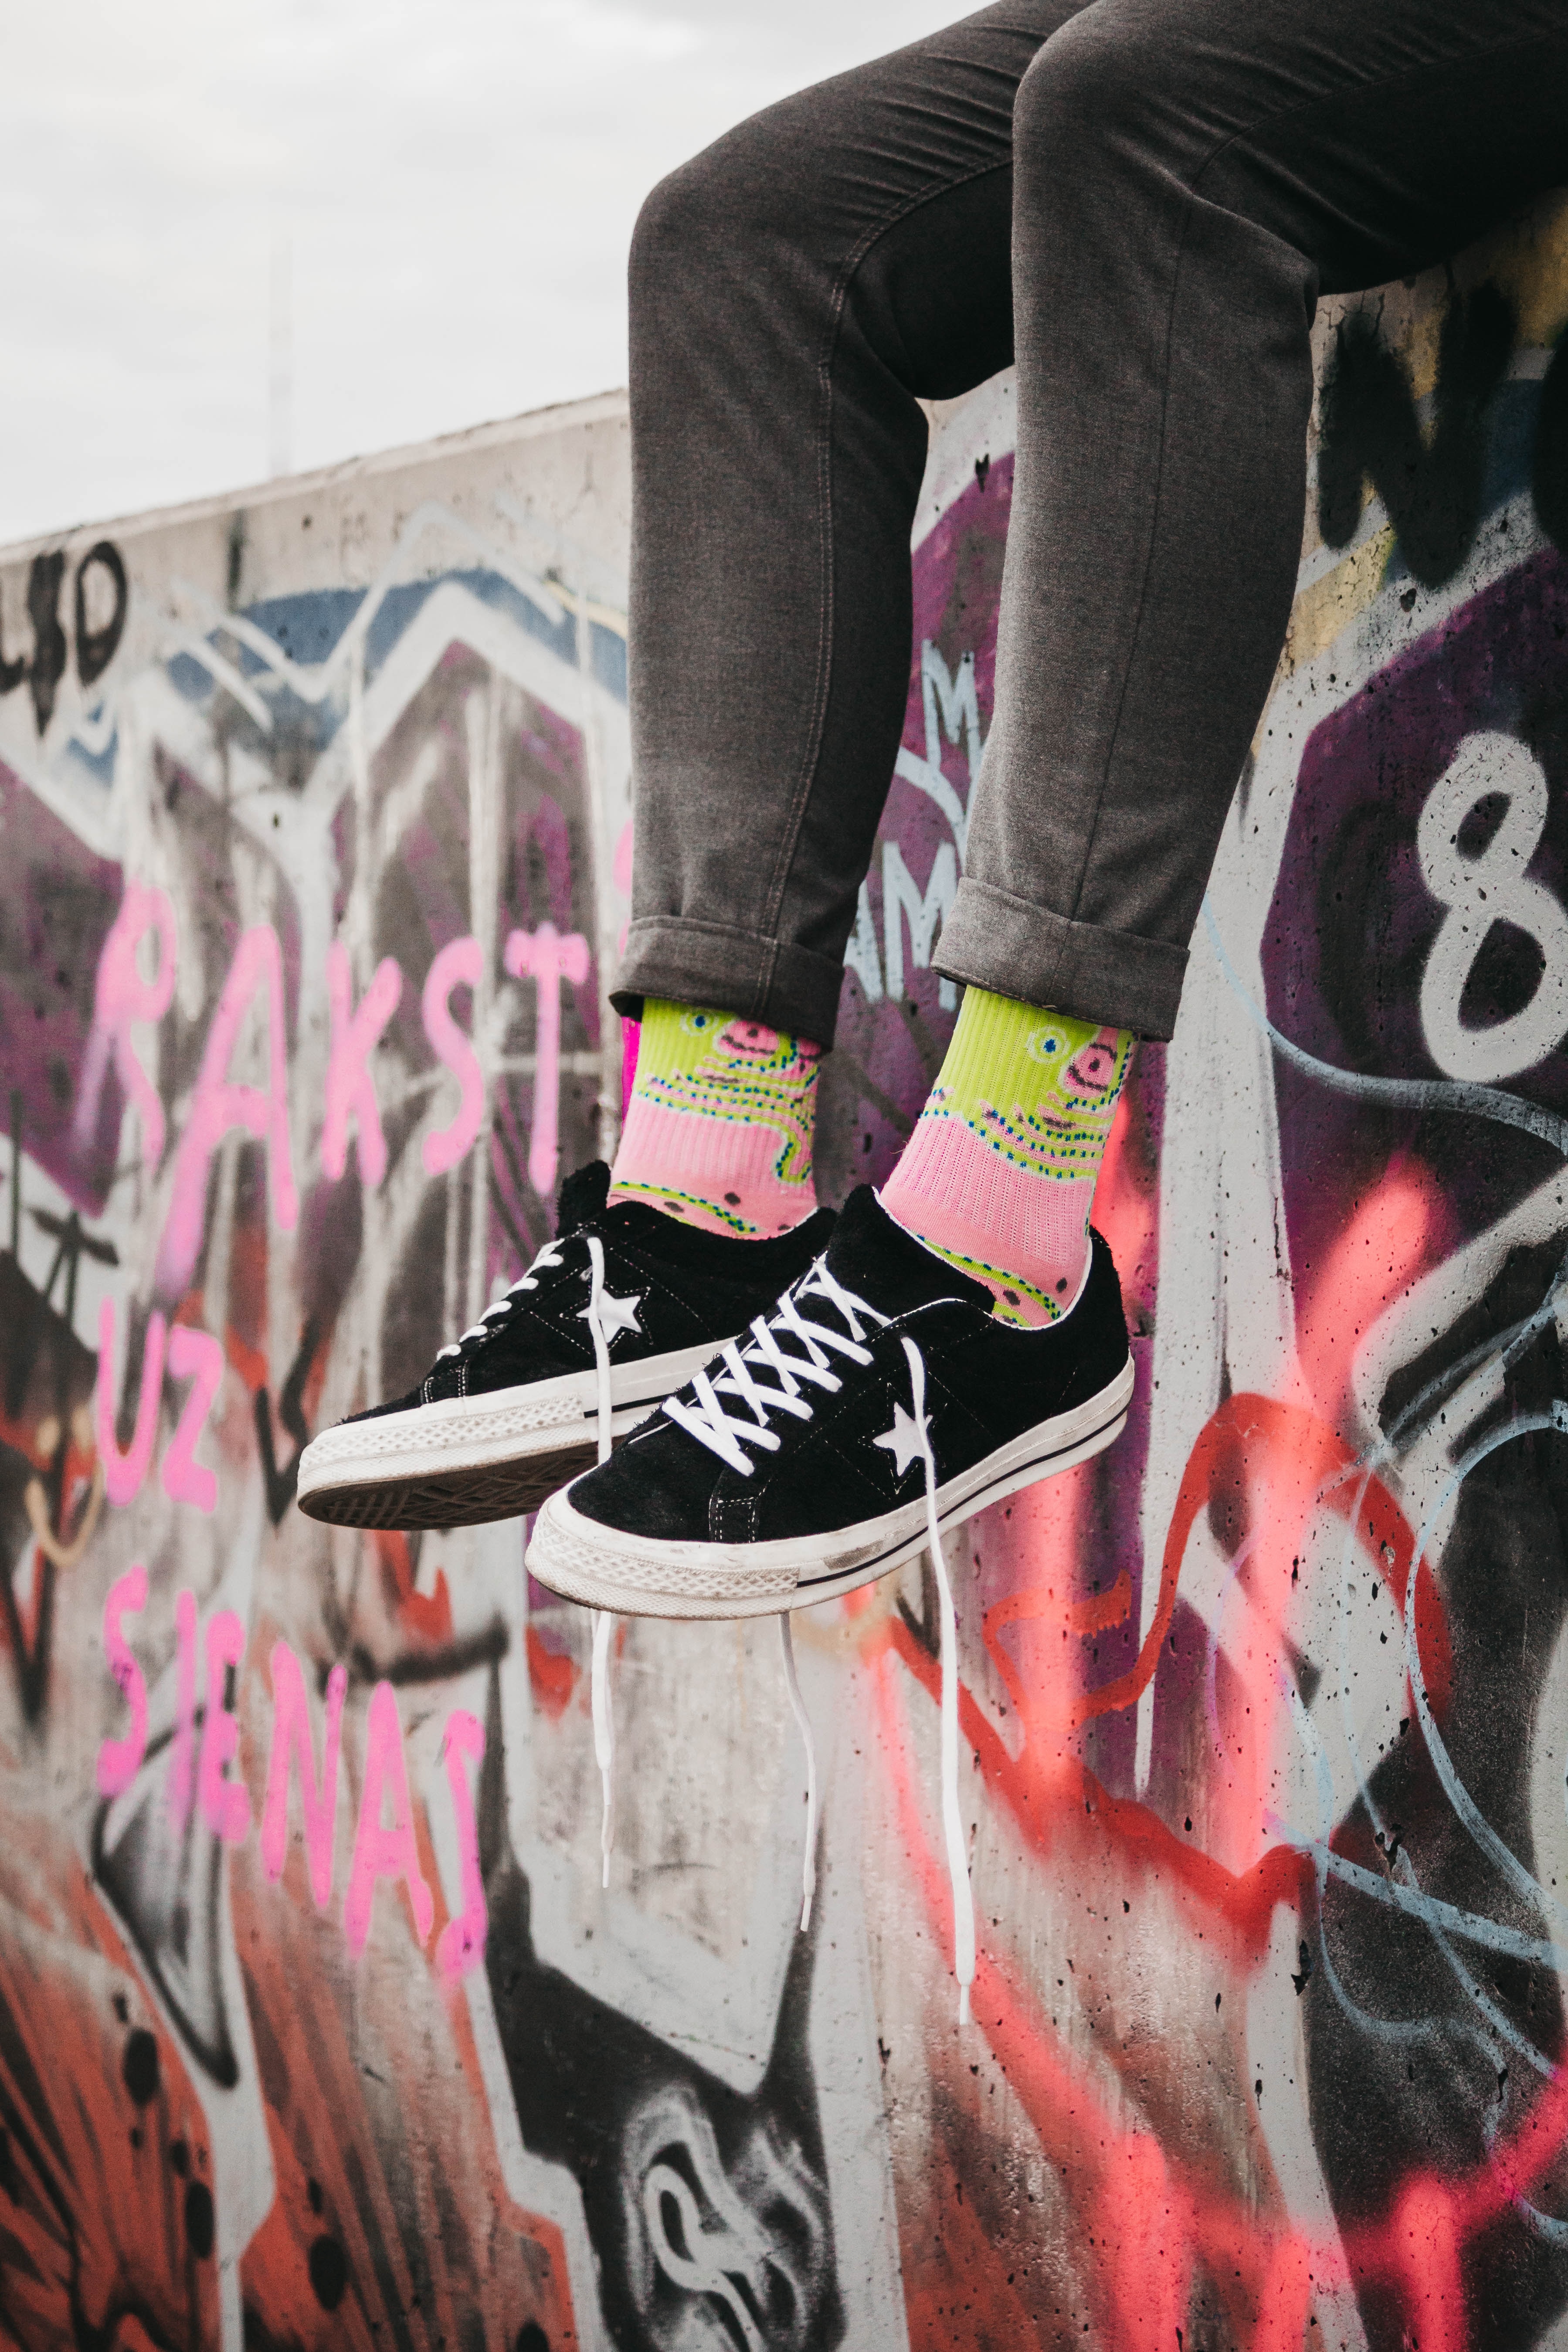 miscellanea, miscellaneous, legs, sneakers, style, graffiti, shoes, socks